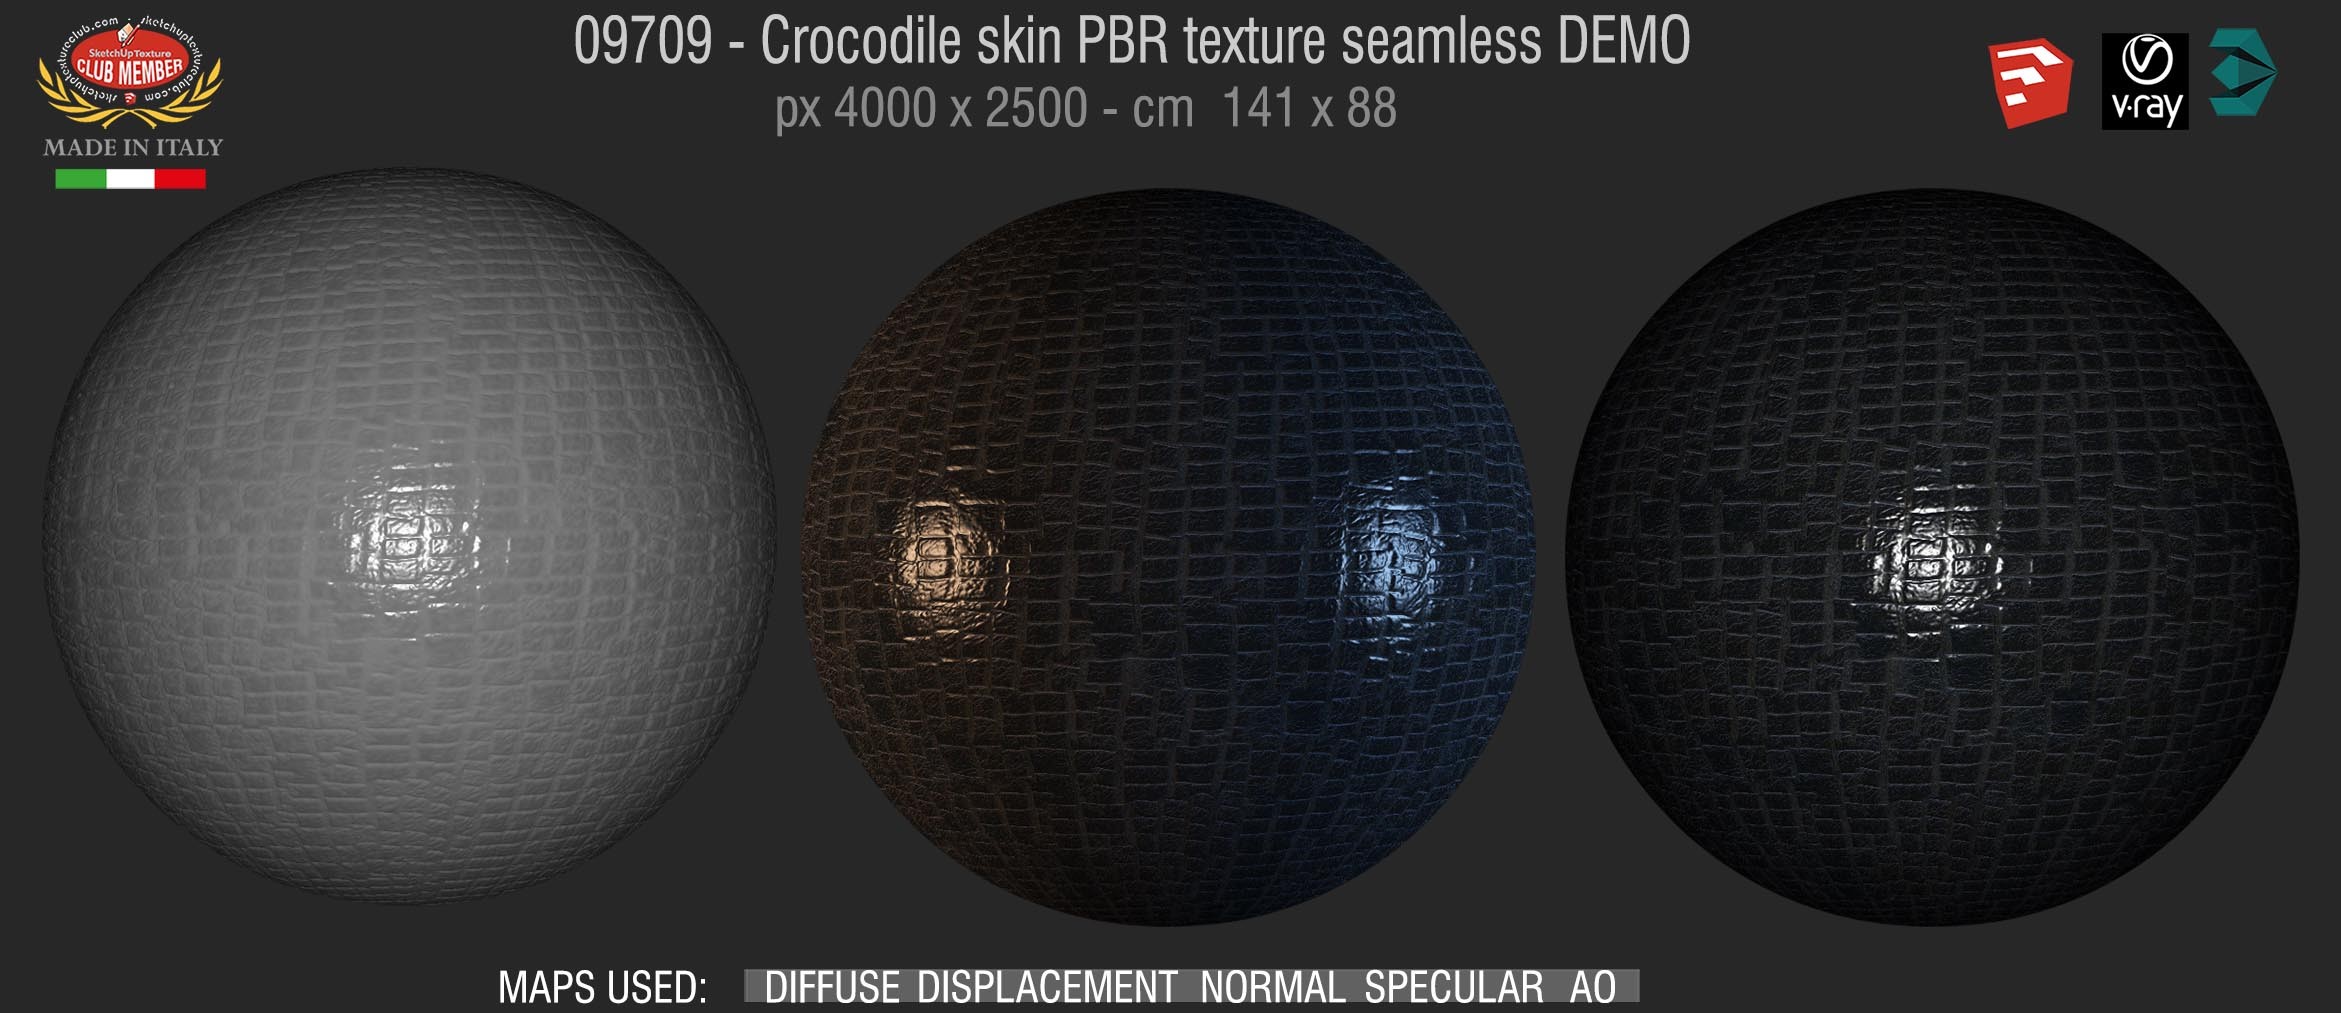 09709 Crocodile skin PBR texture seamless DEMO